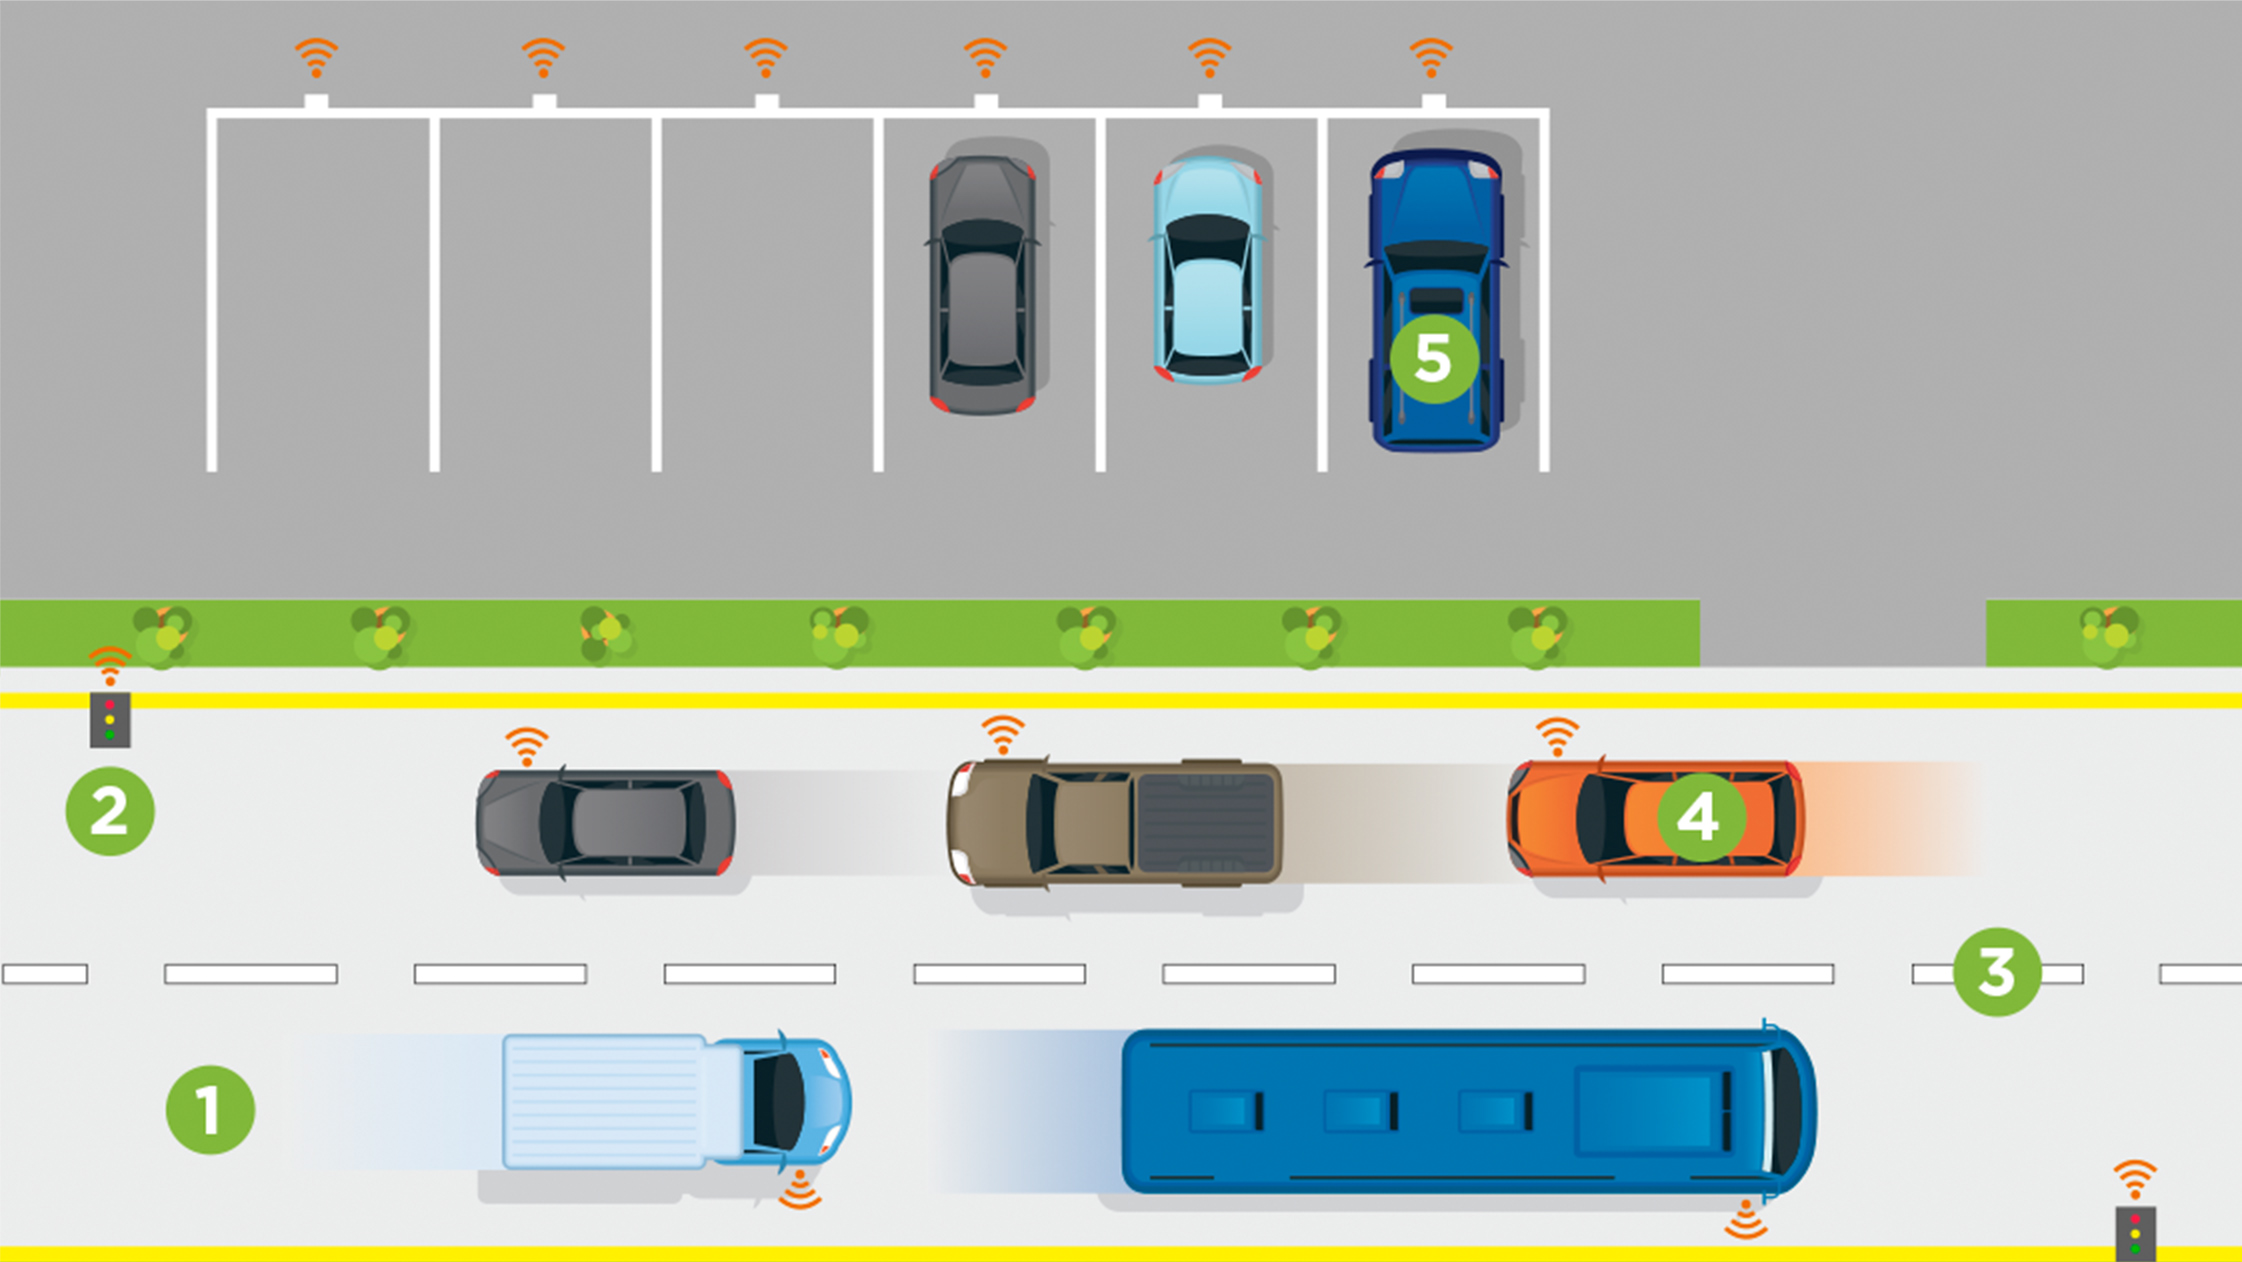 Autonomous Vehicles (AVs) will impact how we build roads.